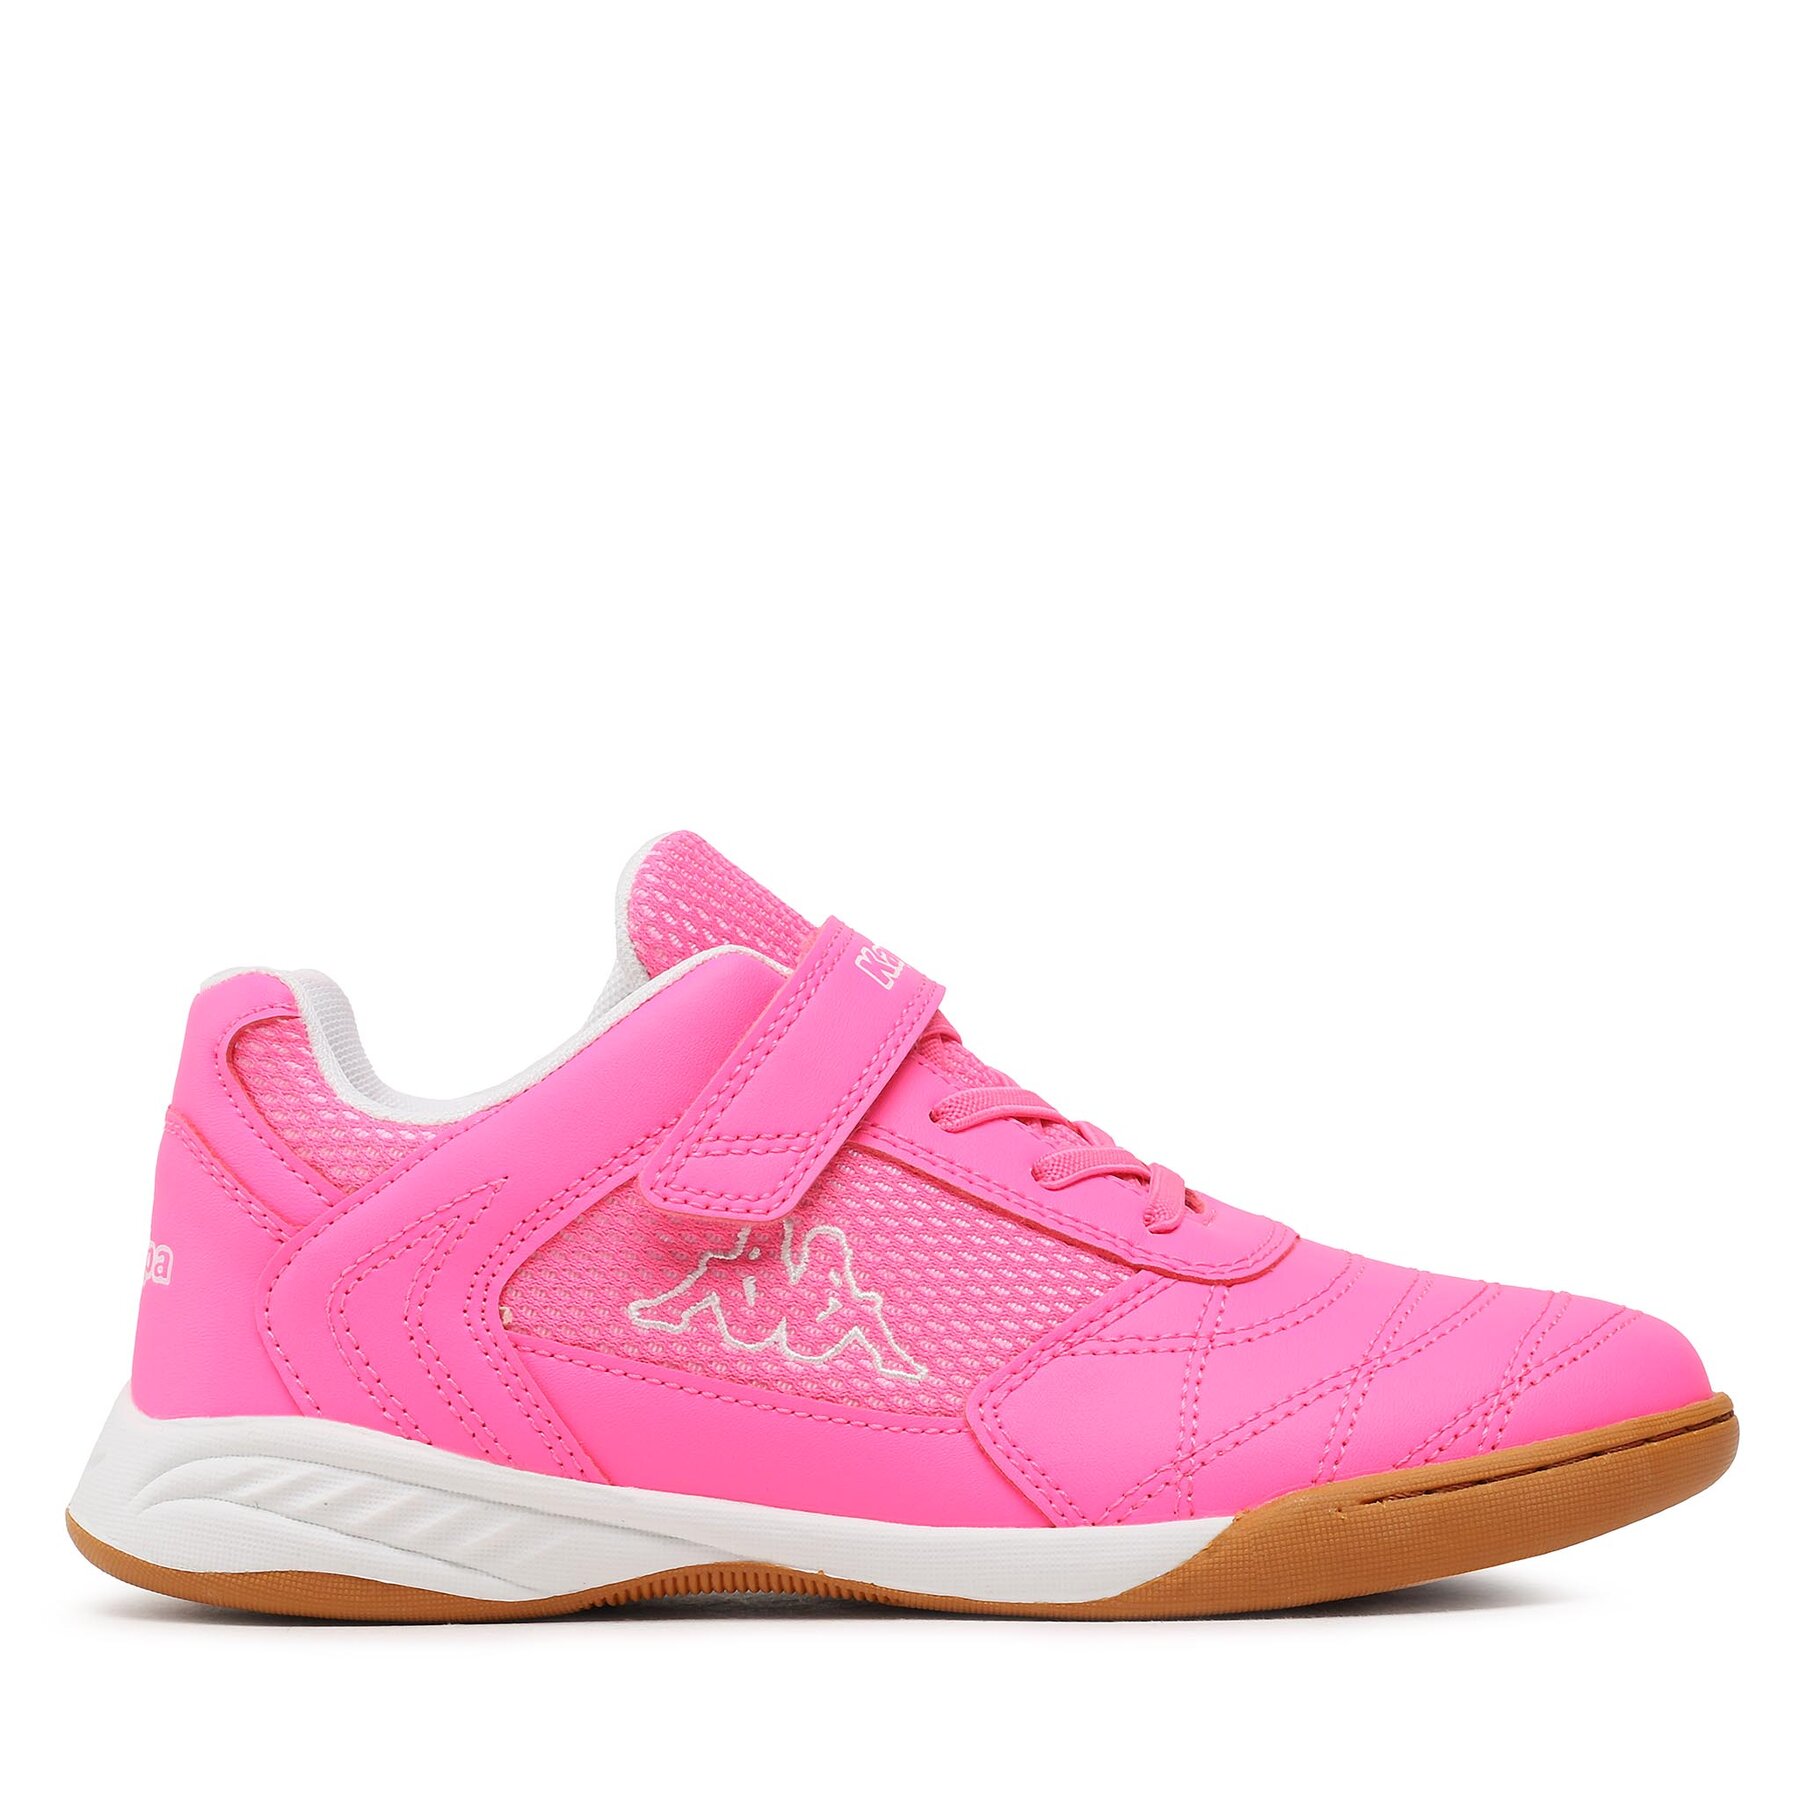 Schuhe Kappa 260765T Pink/White 2210 von Kappa